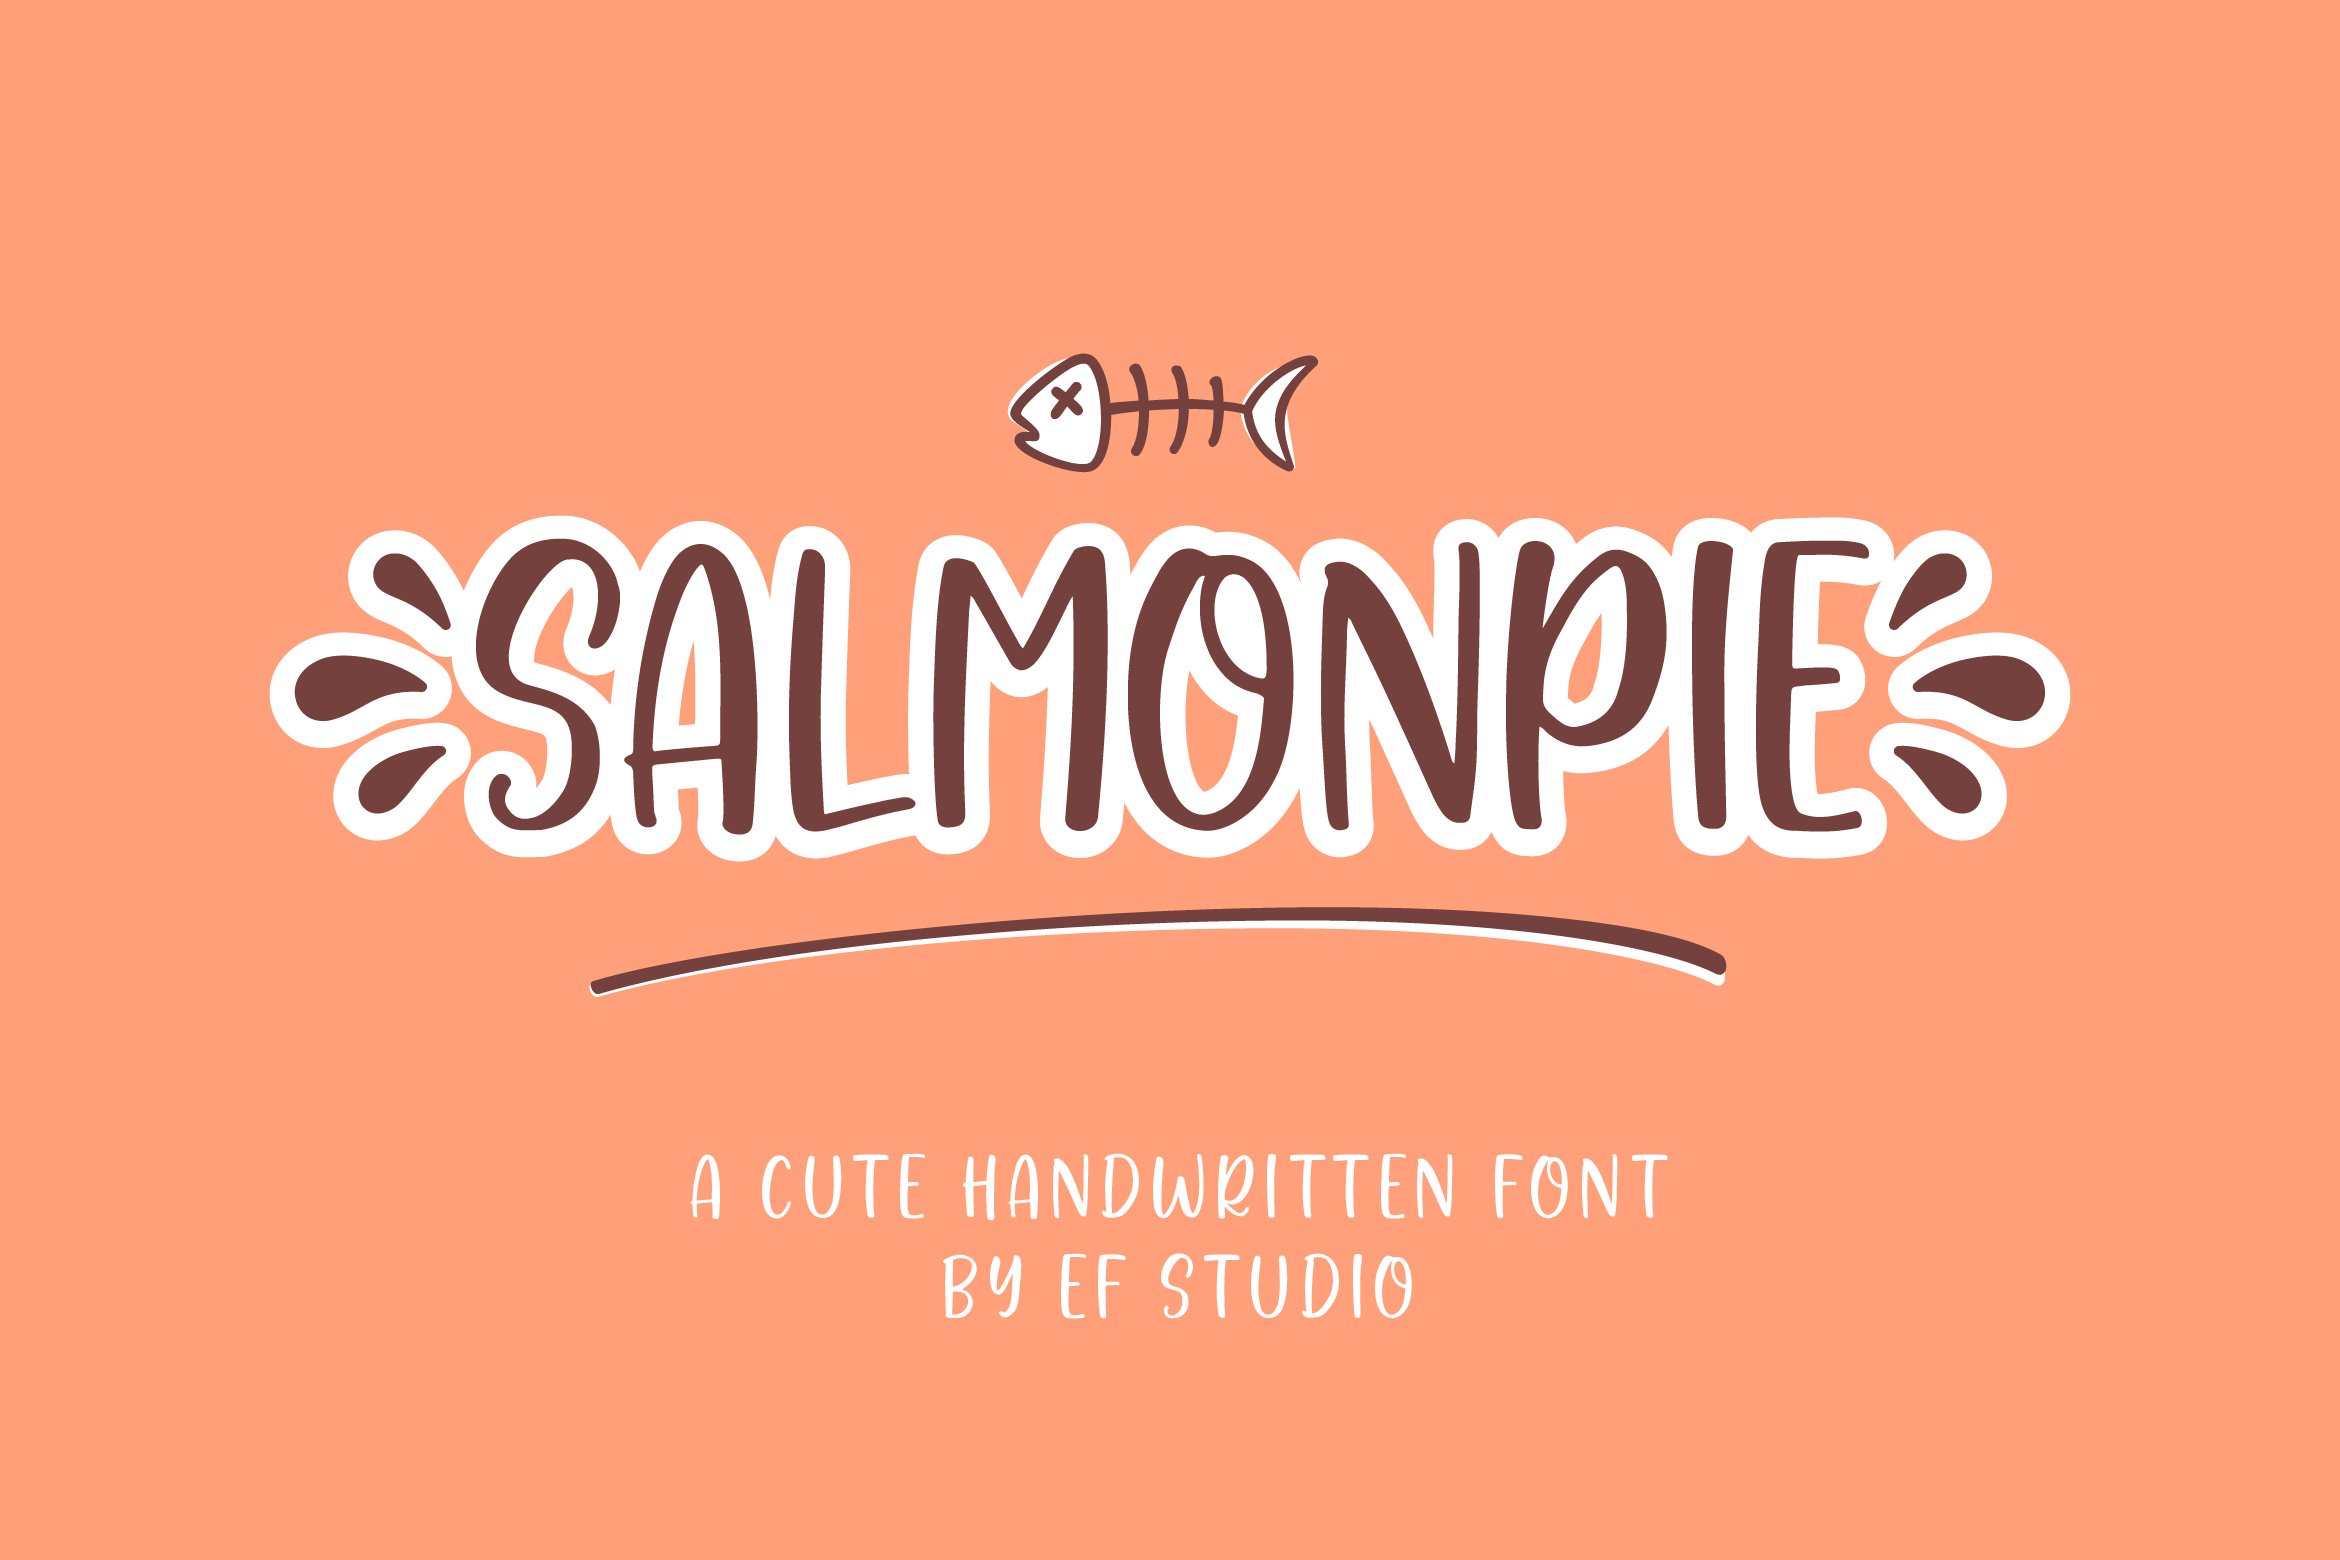 Salmonpie | A Cute Handwritten Font cover image.